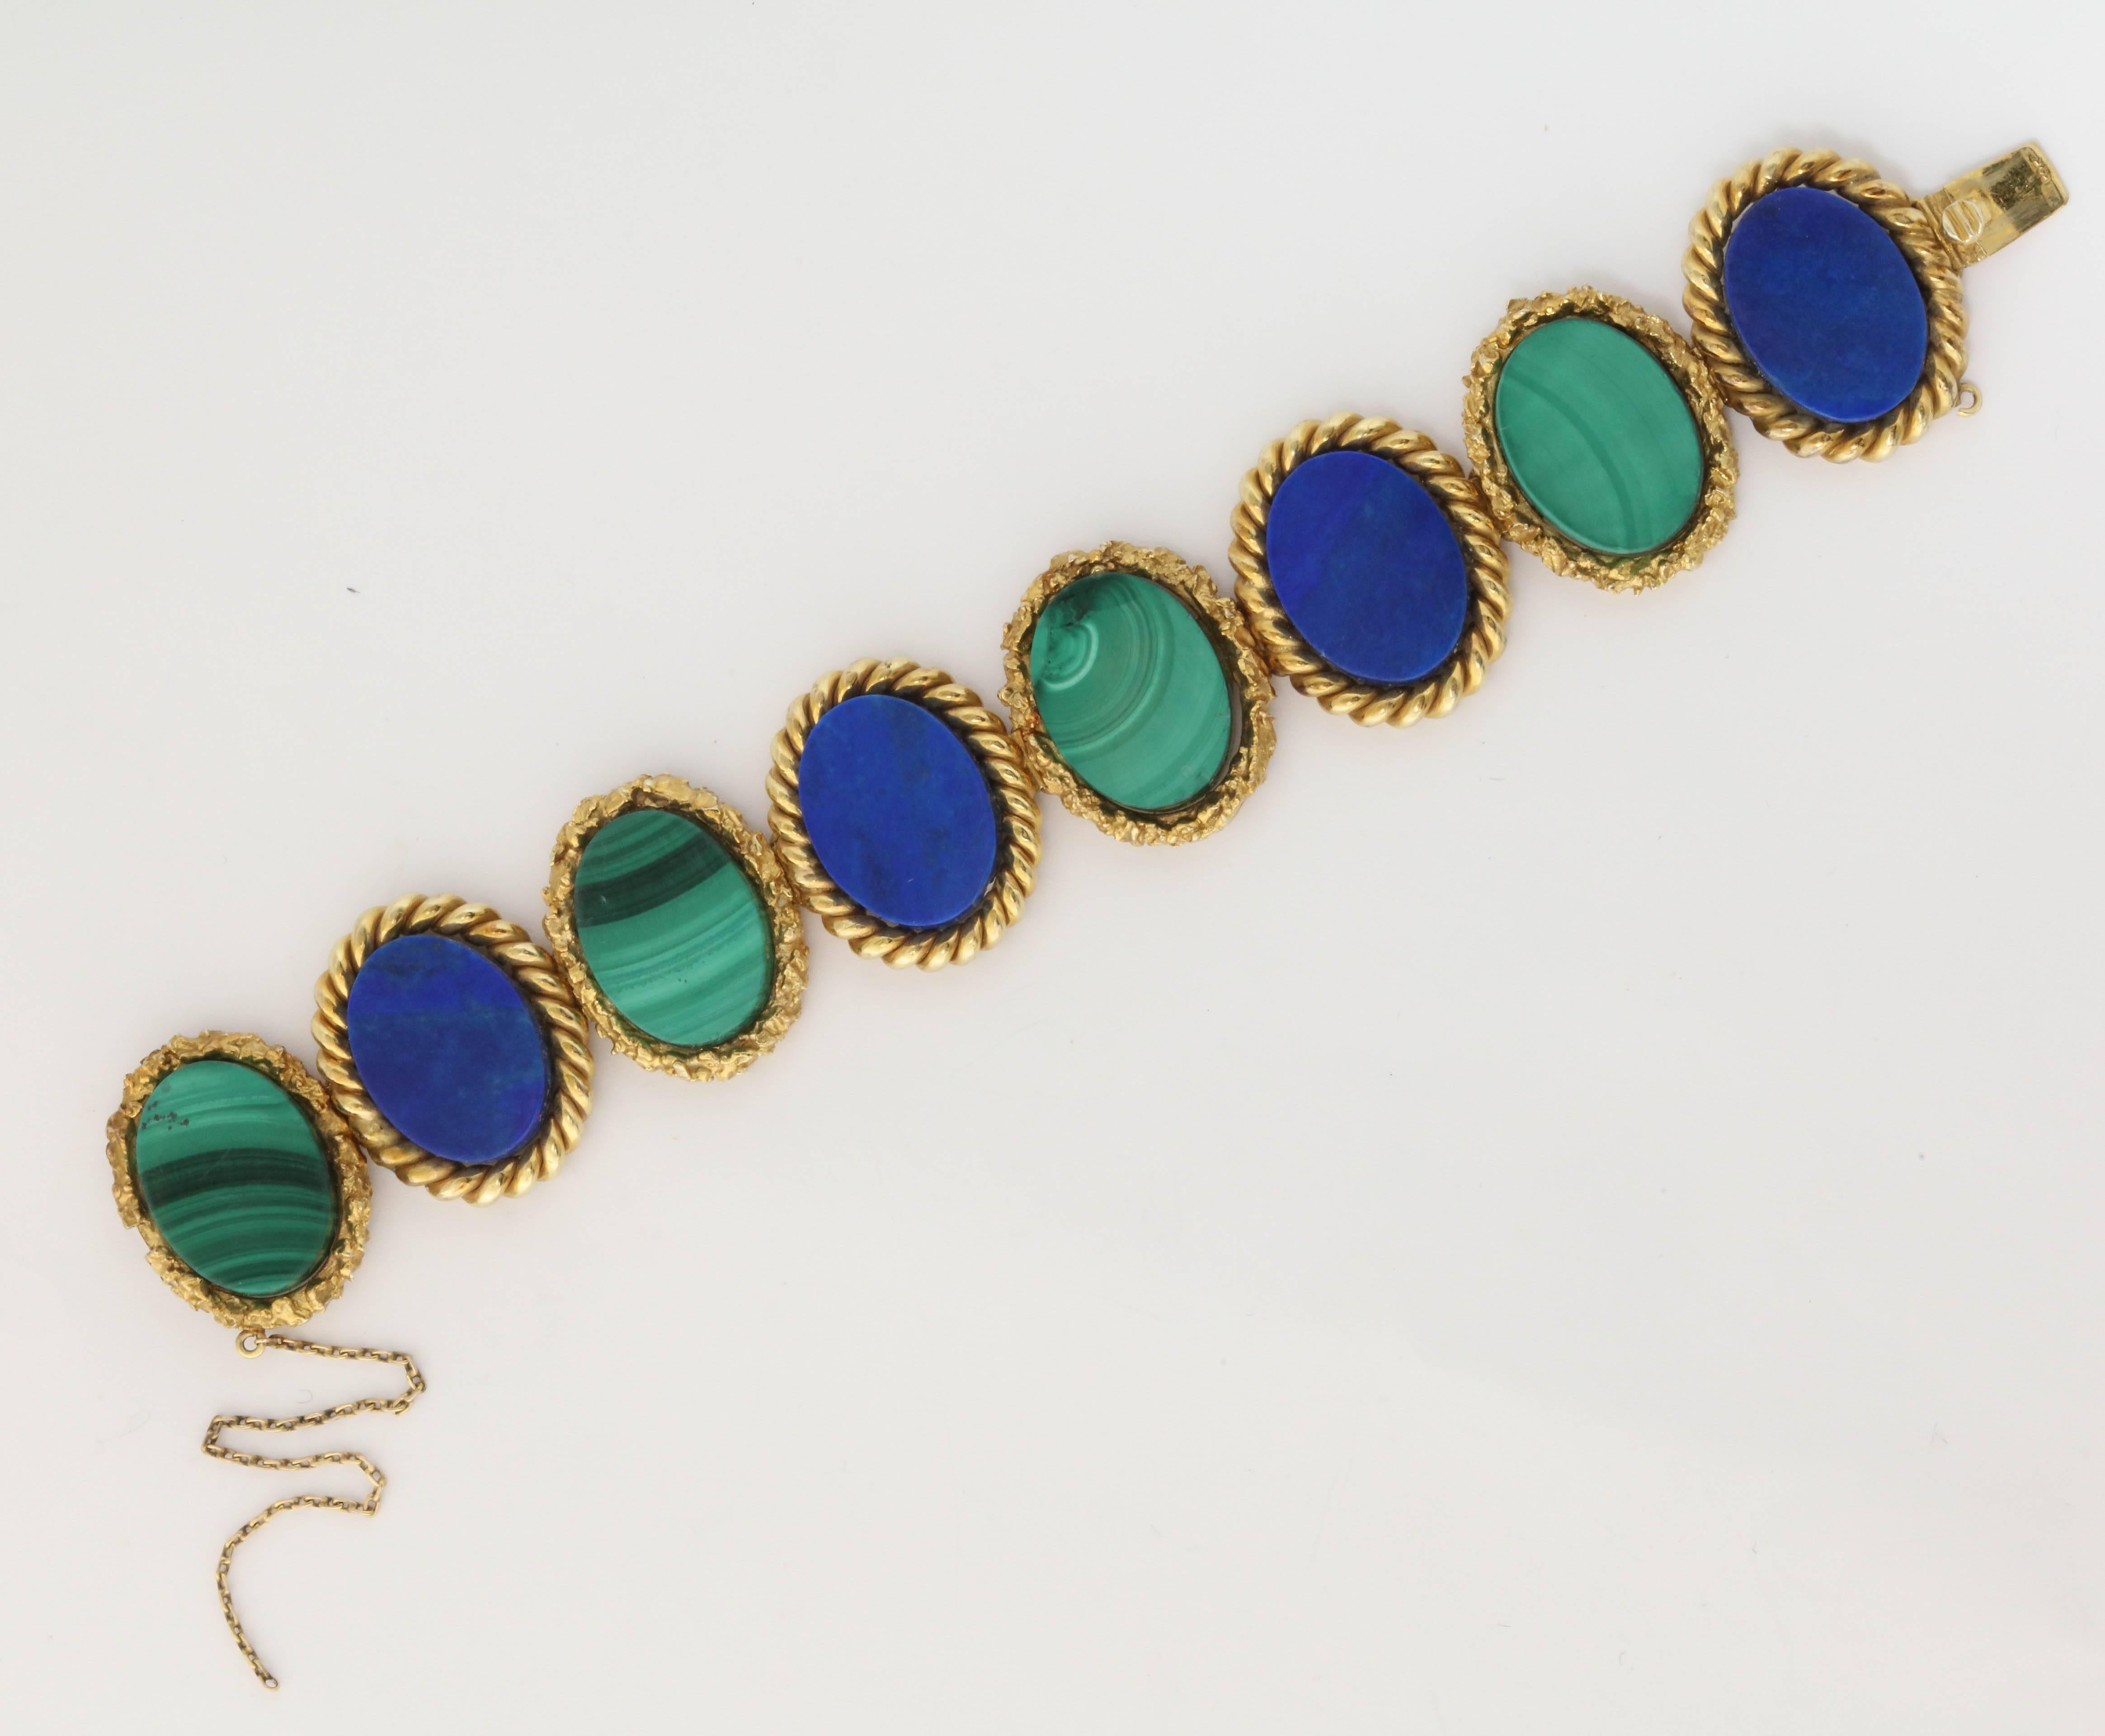 1960s High Quality Oval Cut Lapis Lazuli And Malachite Flexible Link Bracelet For Sale 2